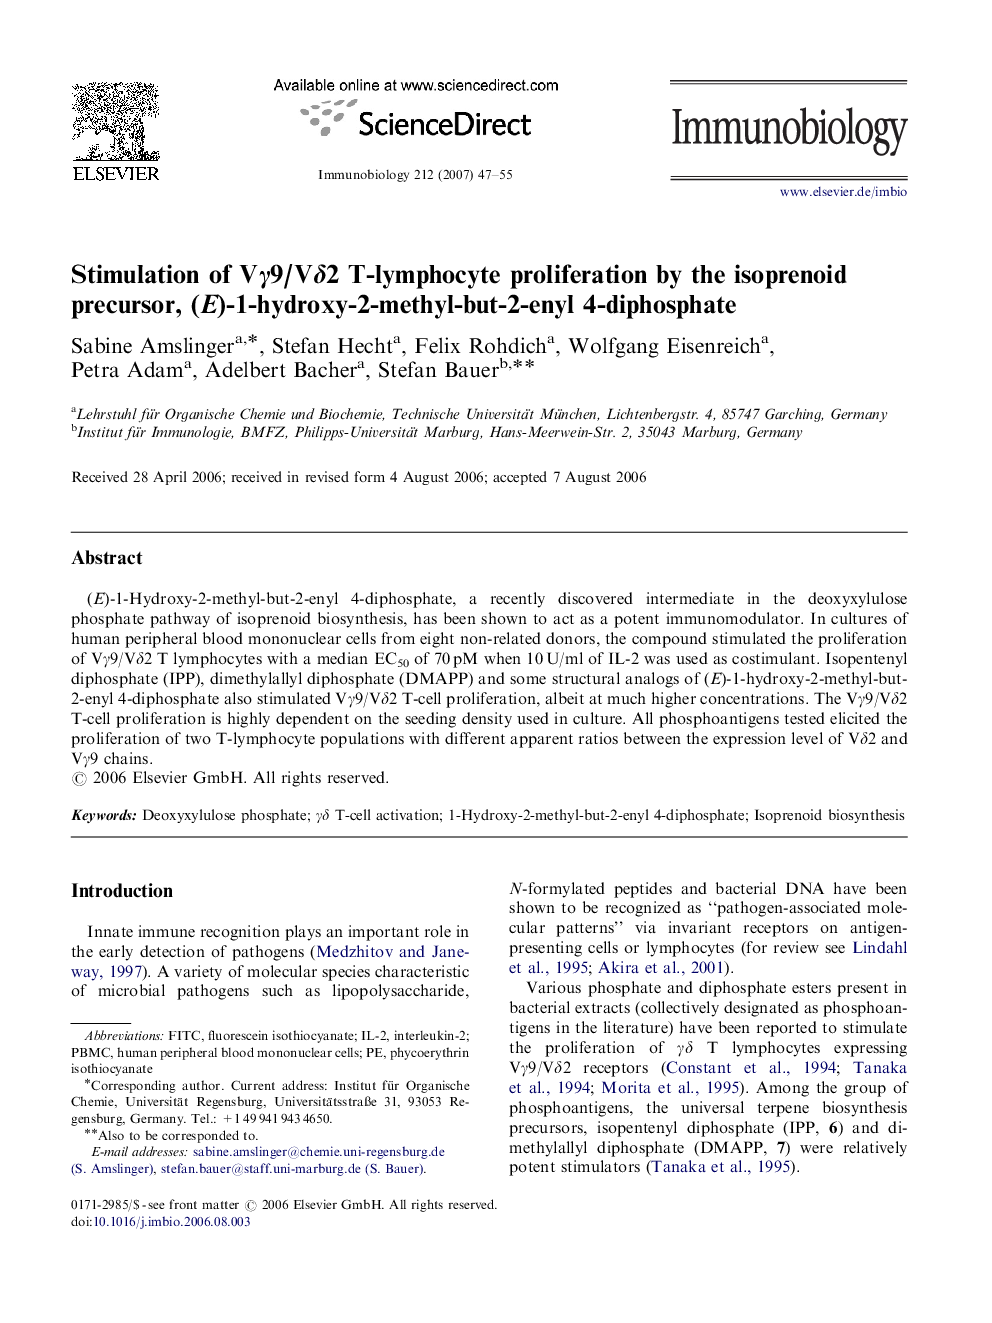 Stimulation of Vγ9/Vδ2 T-lymphocyte proliferation by the isoprenoid precursor, (E)-1-hydroxy-2-methyl-but-2-enyl 4-diphosphate